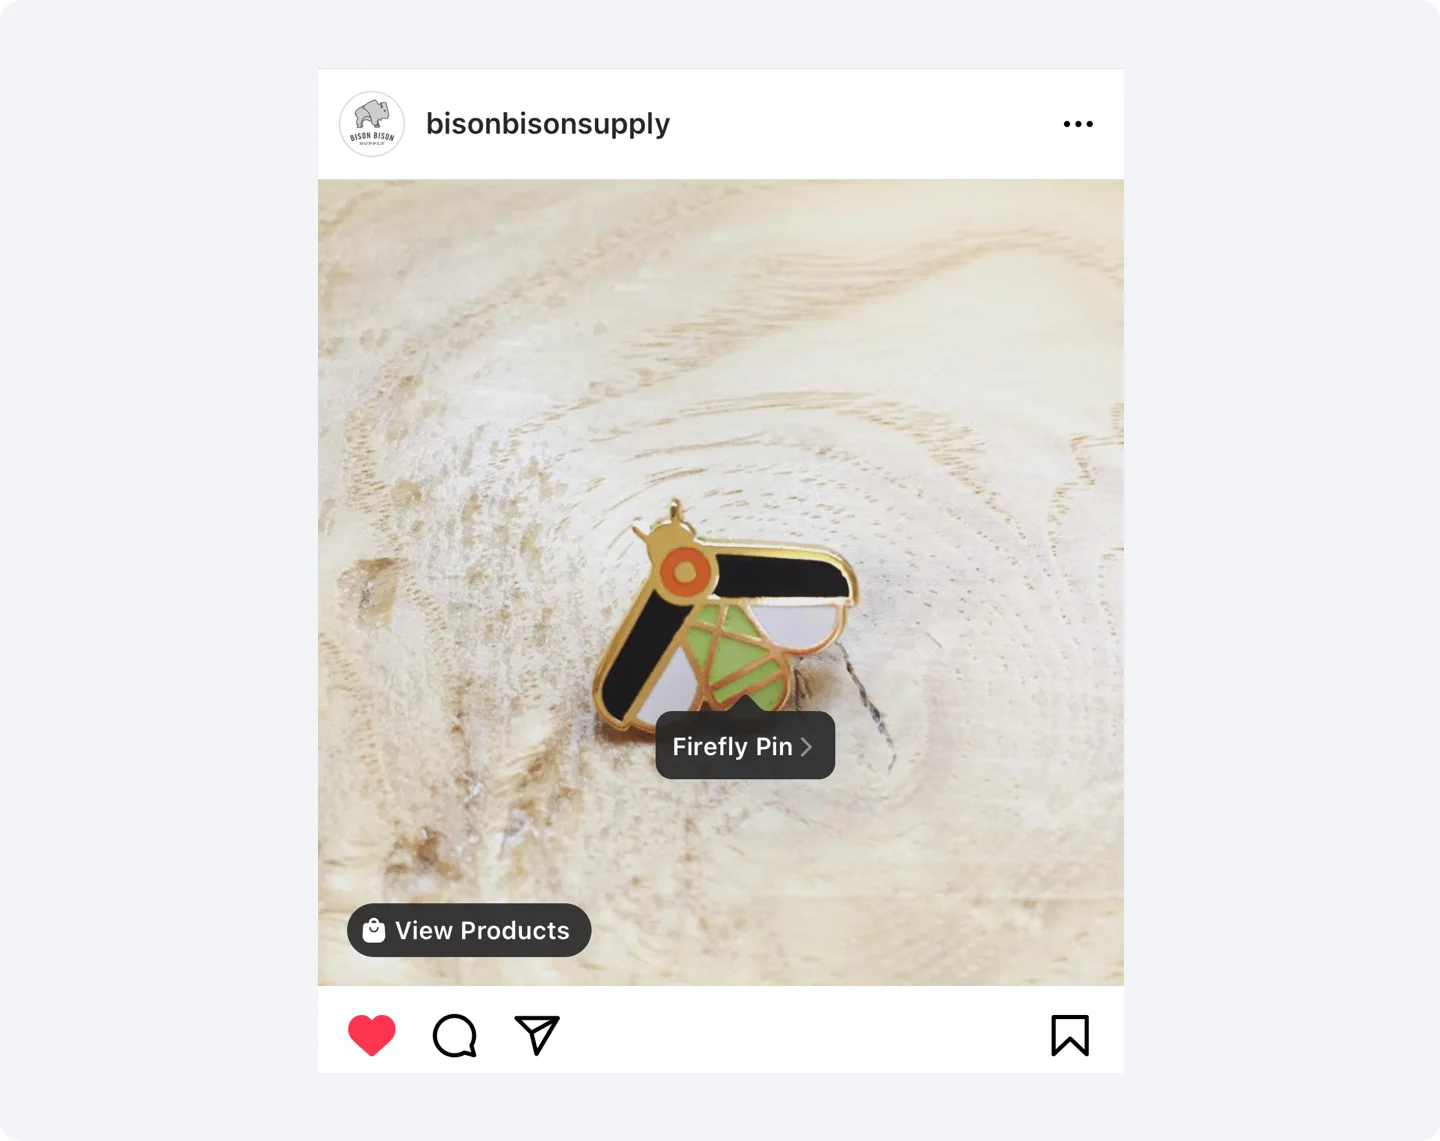 Pin on Instagram